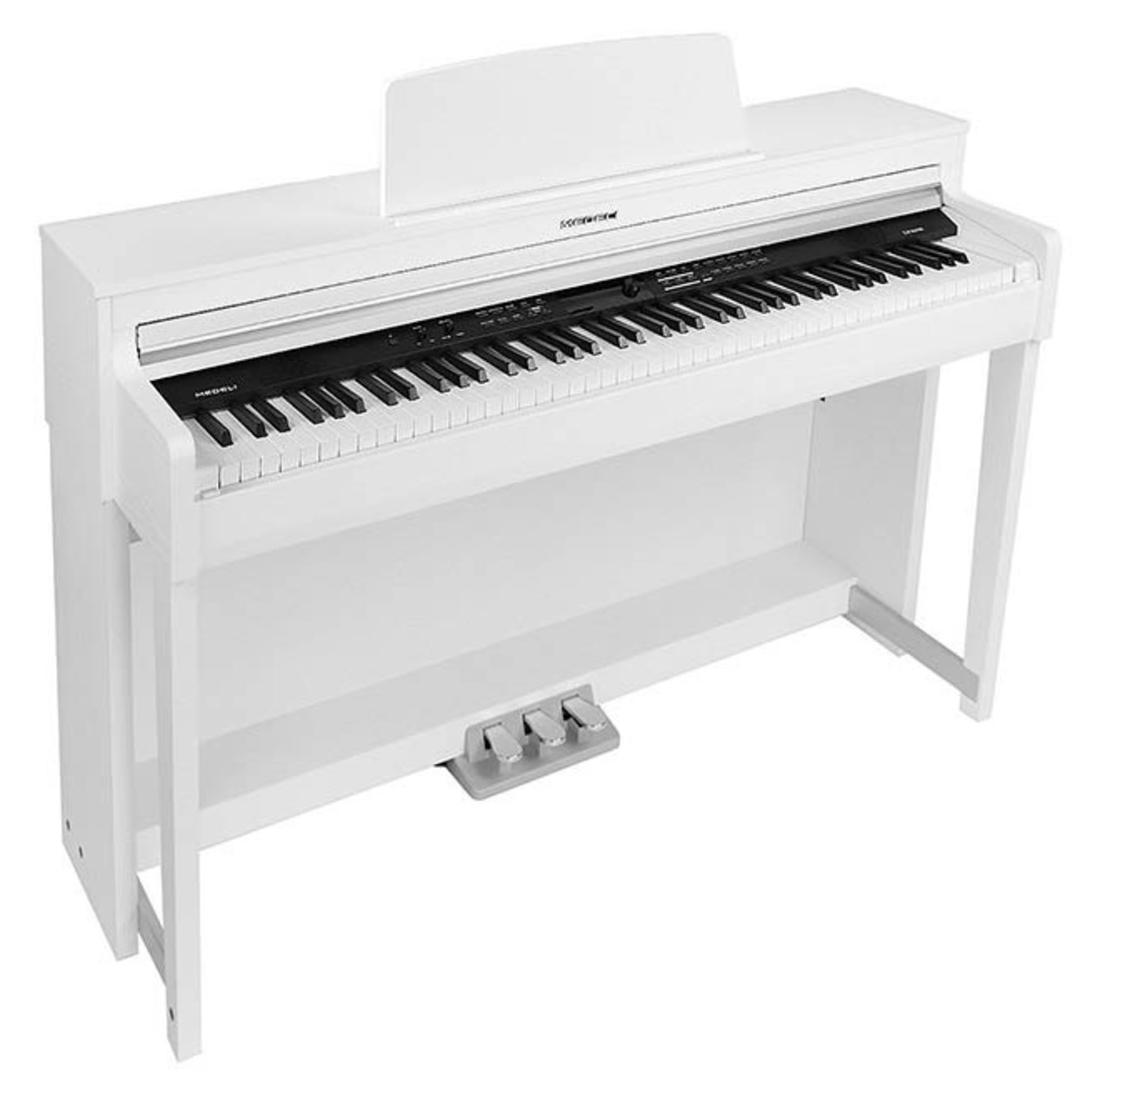 Цифровые пианино Medeli DP460K-PVC-WH пьесы чехов а п